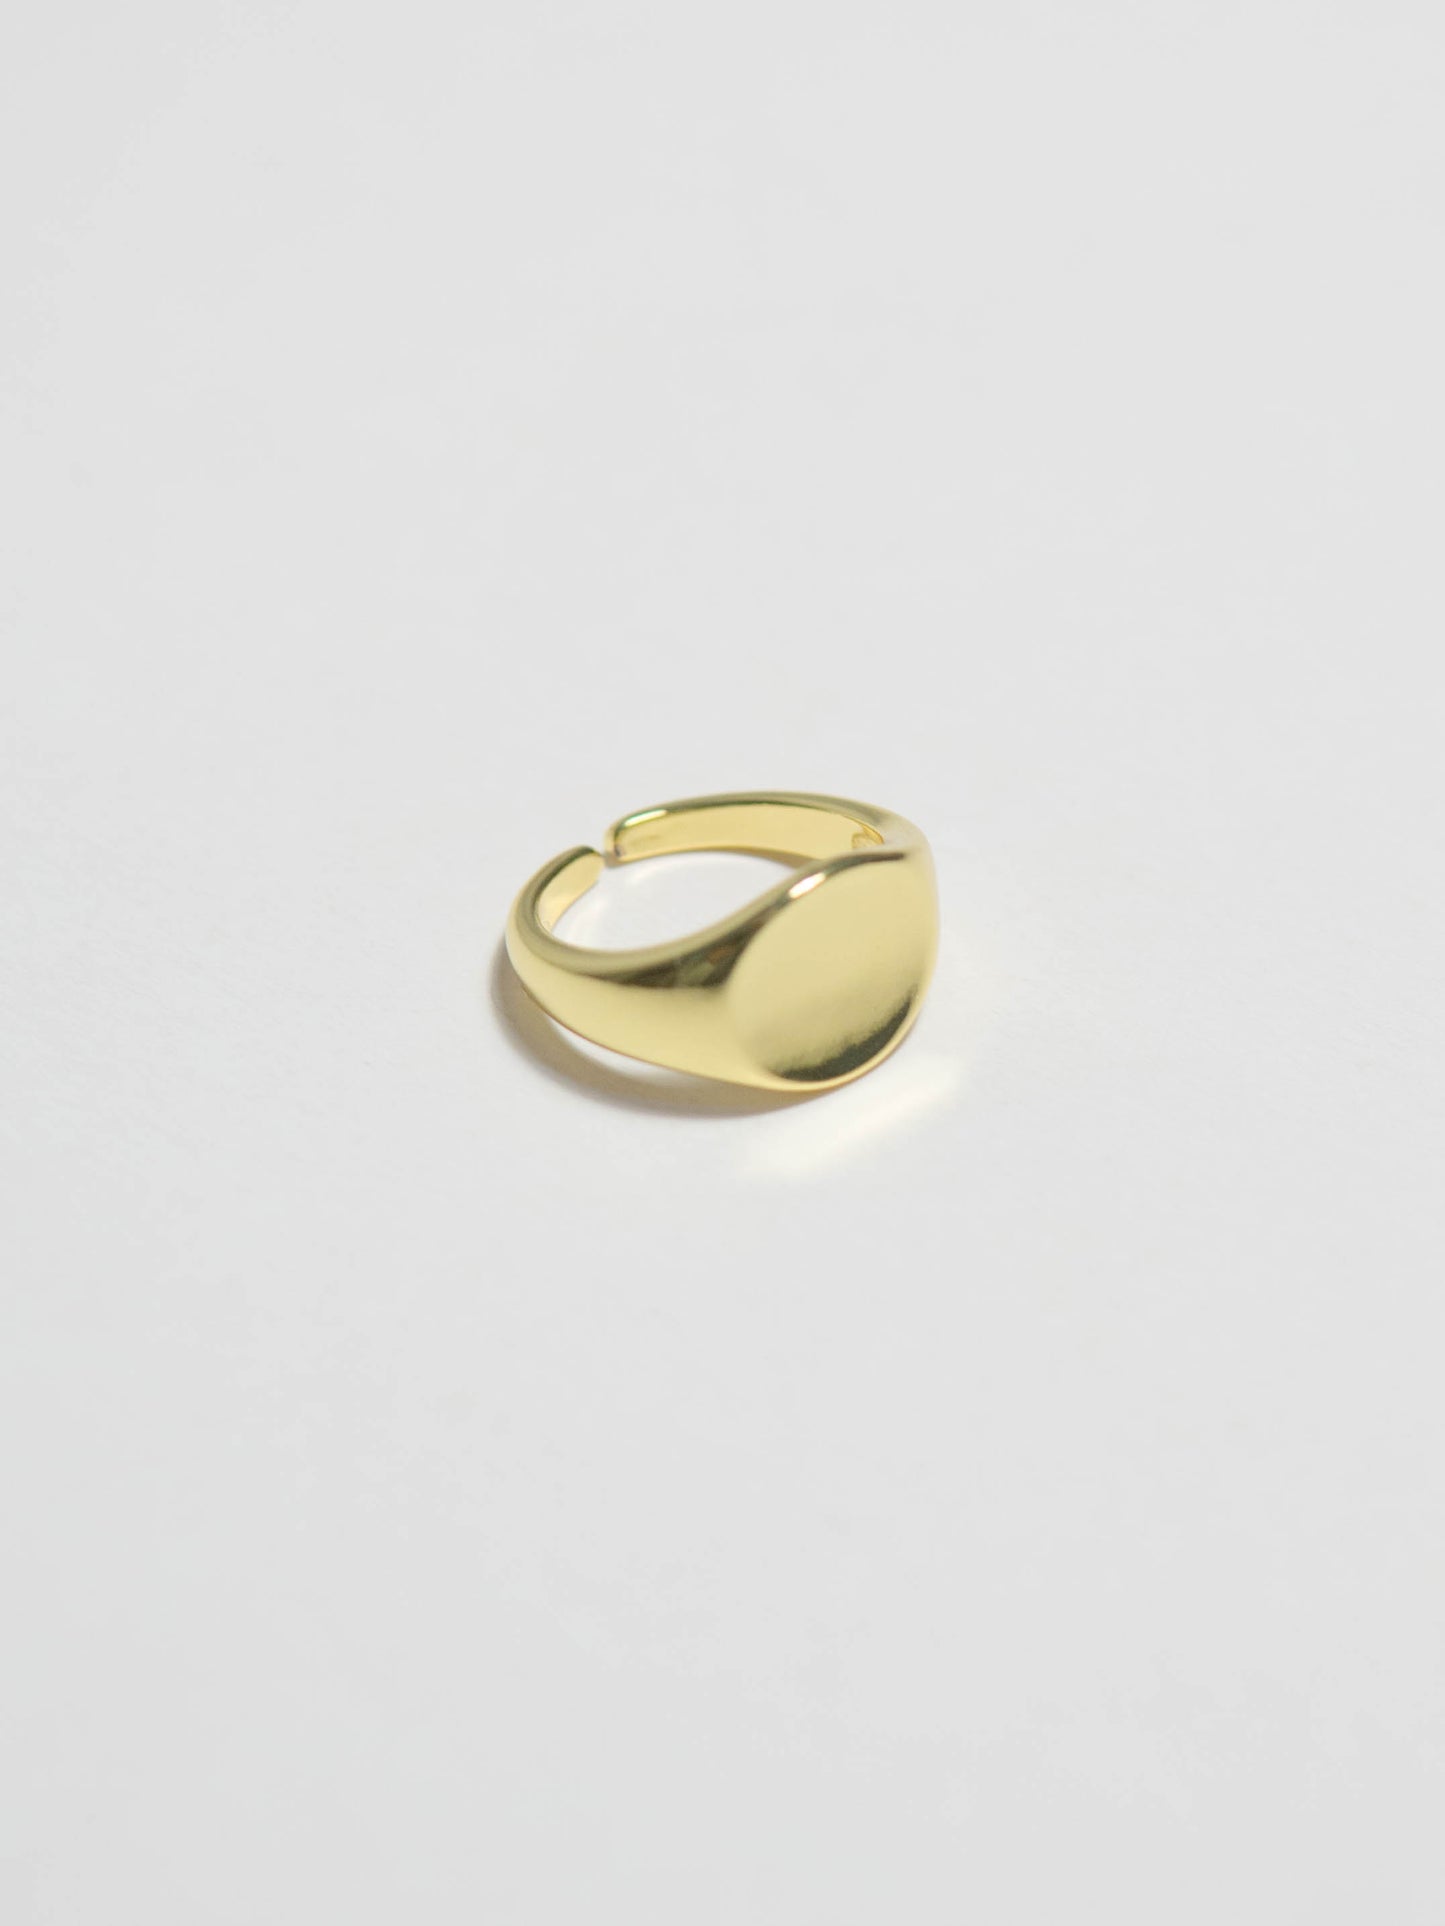 Geometric circle ring in Gold Vermeil